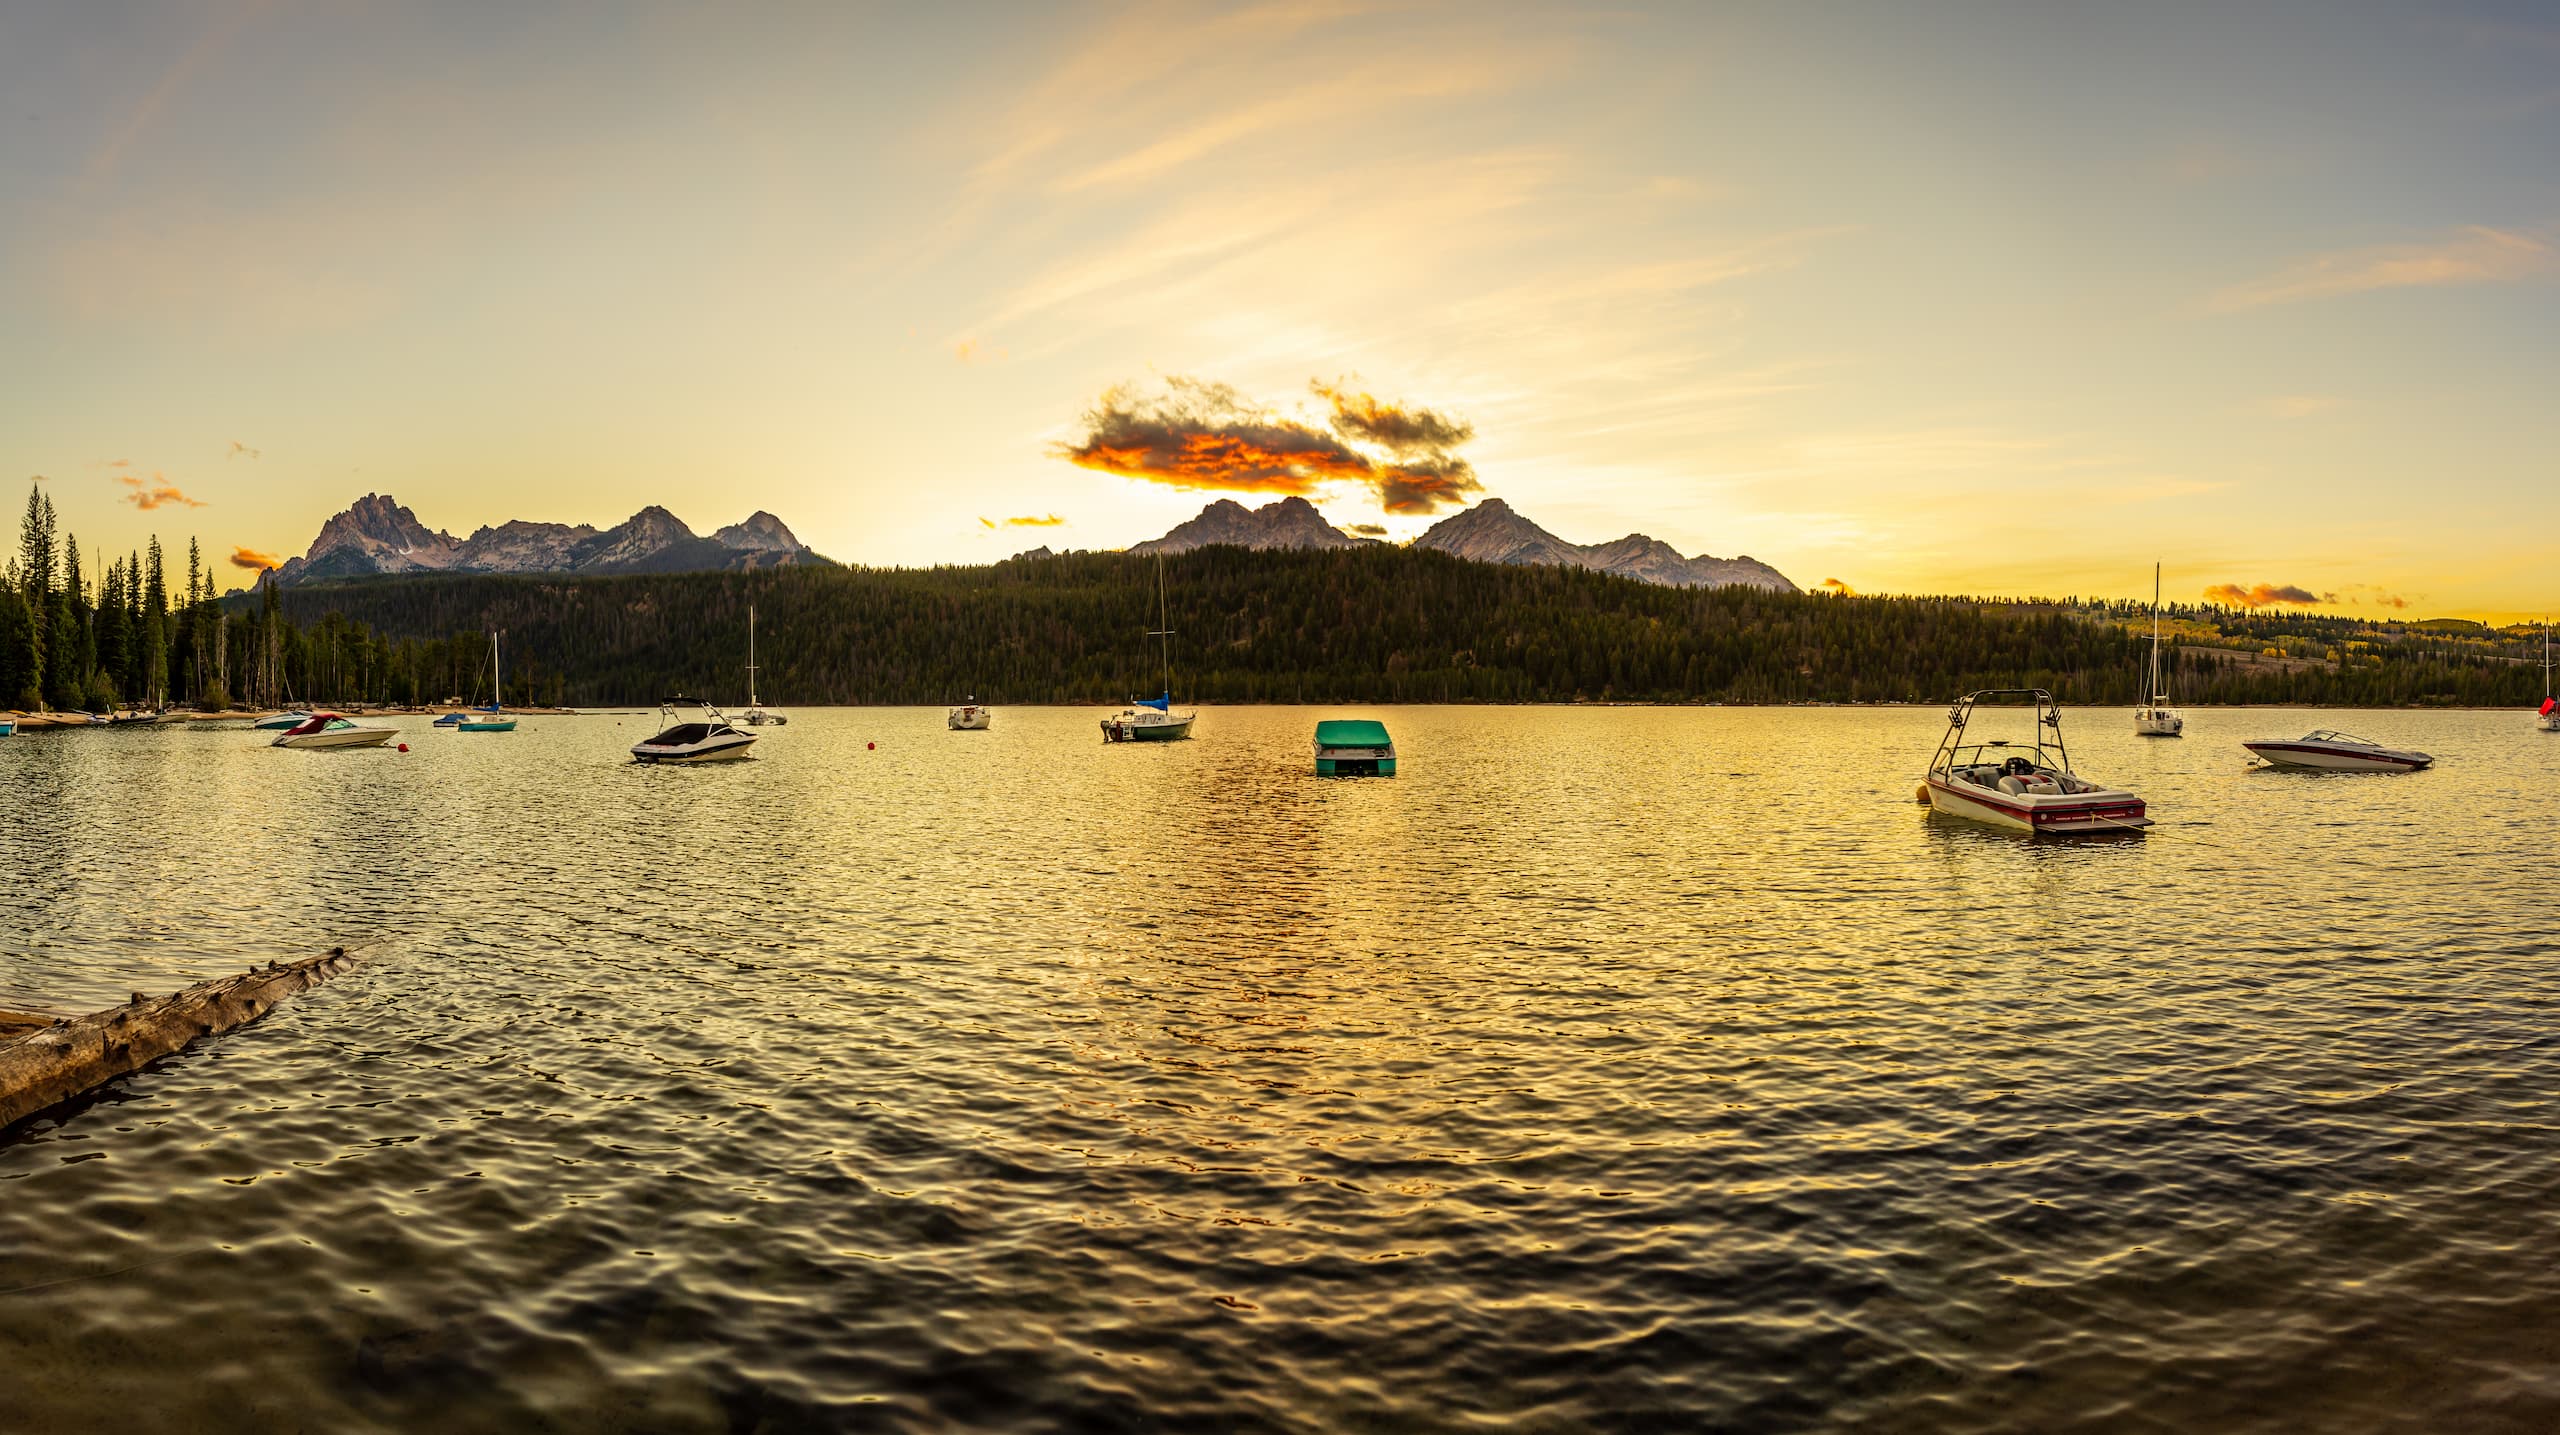 Mountain sunset on Red Fish Lake in Stanley, Idaho